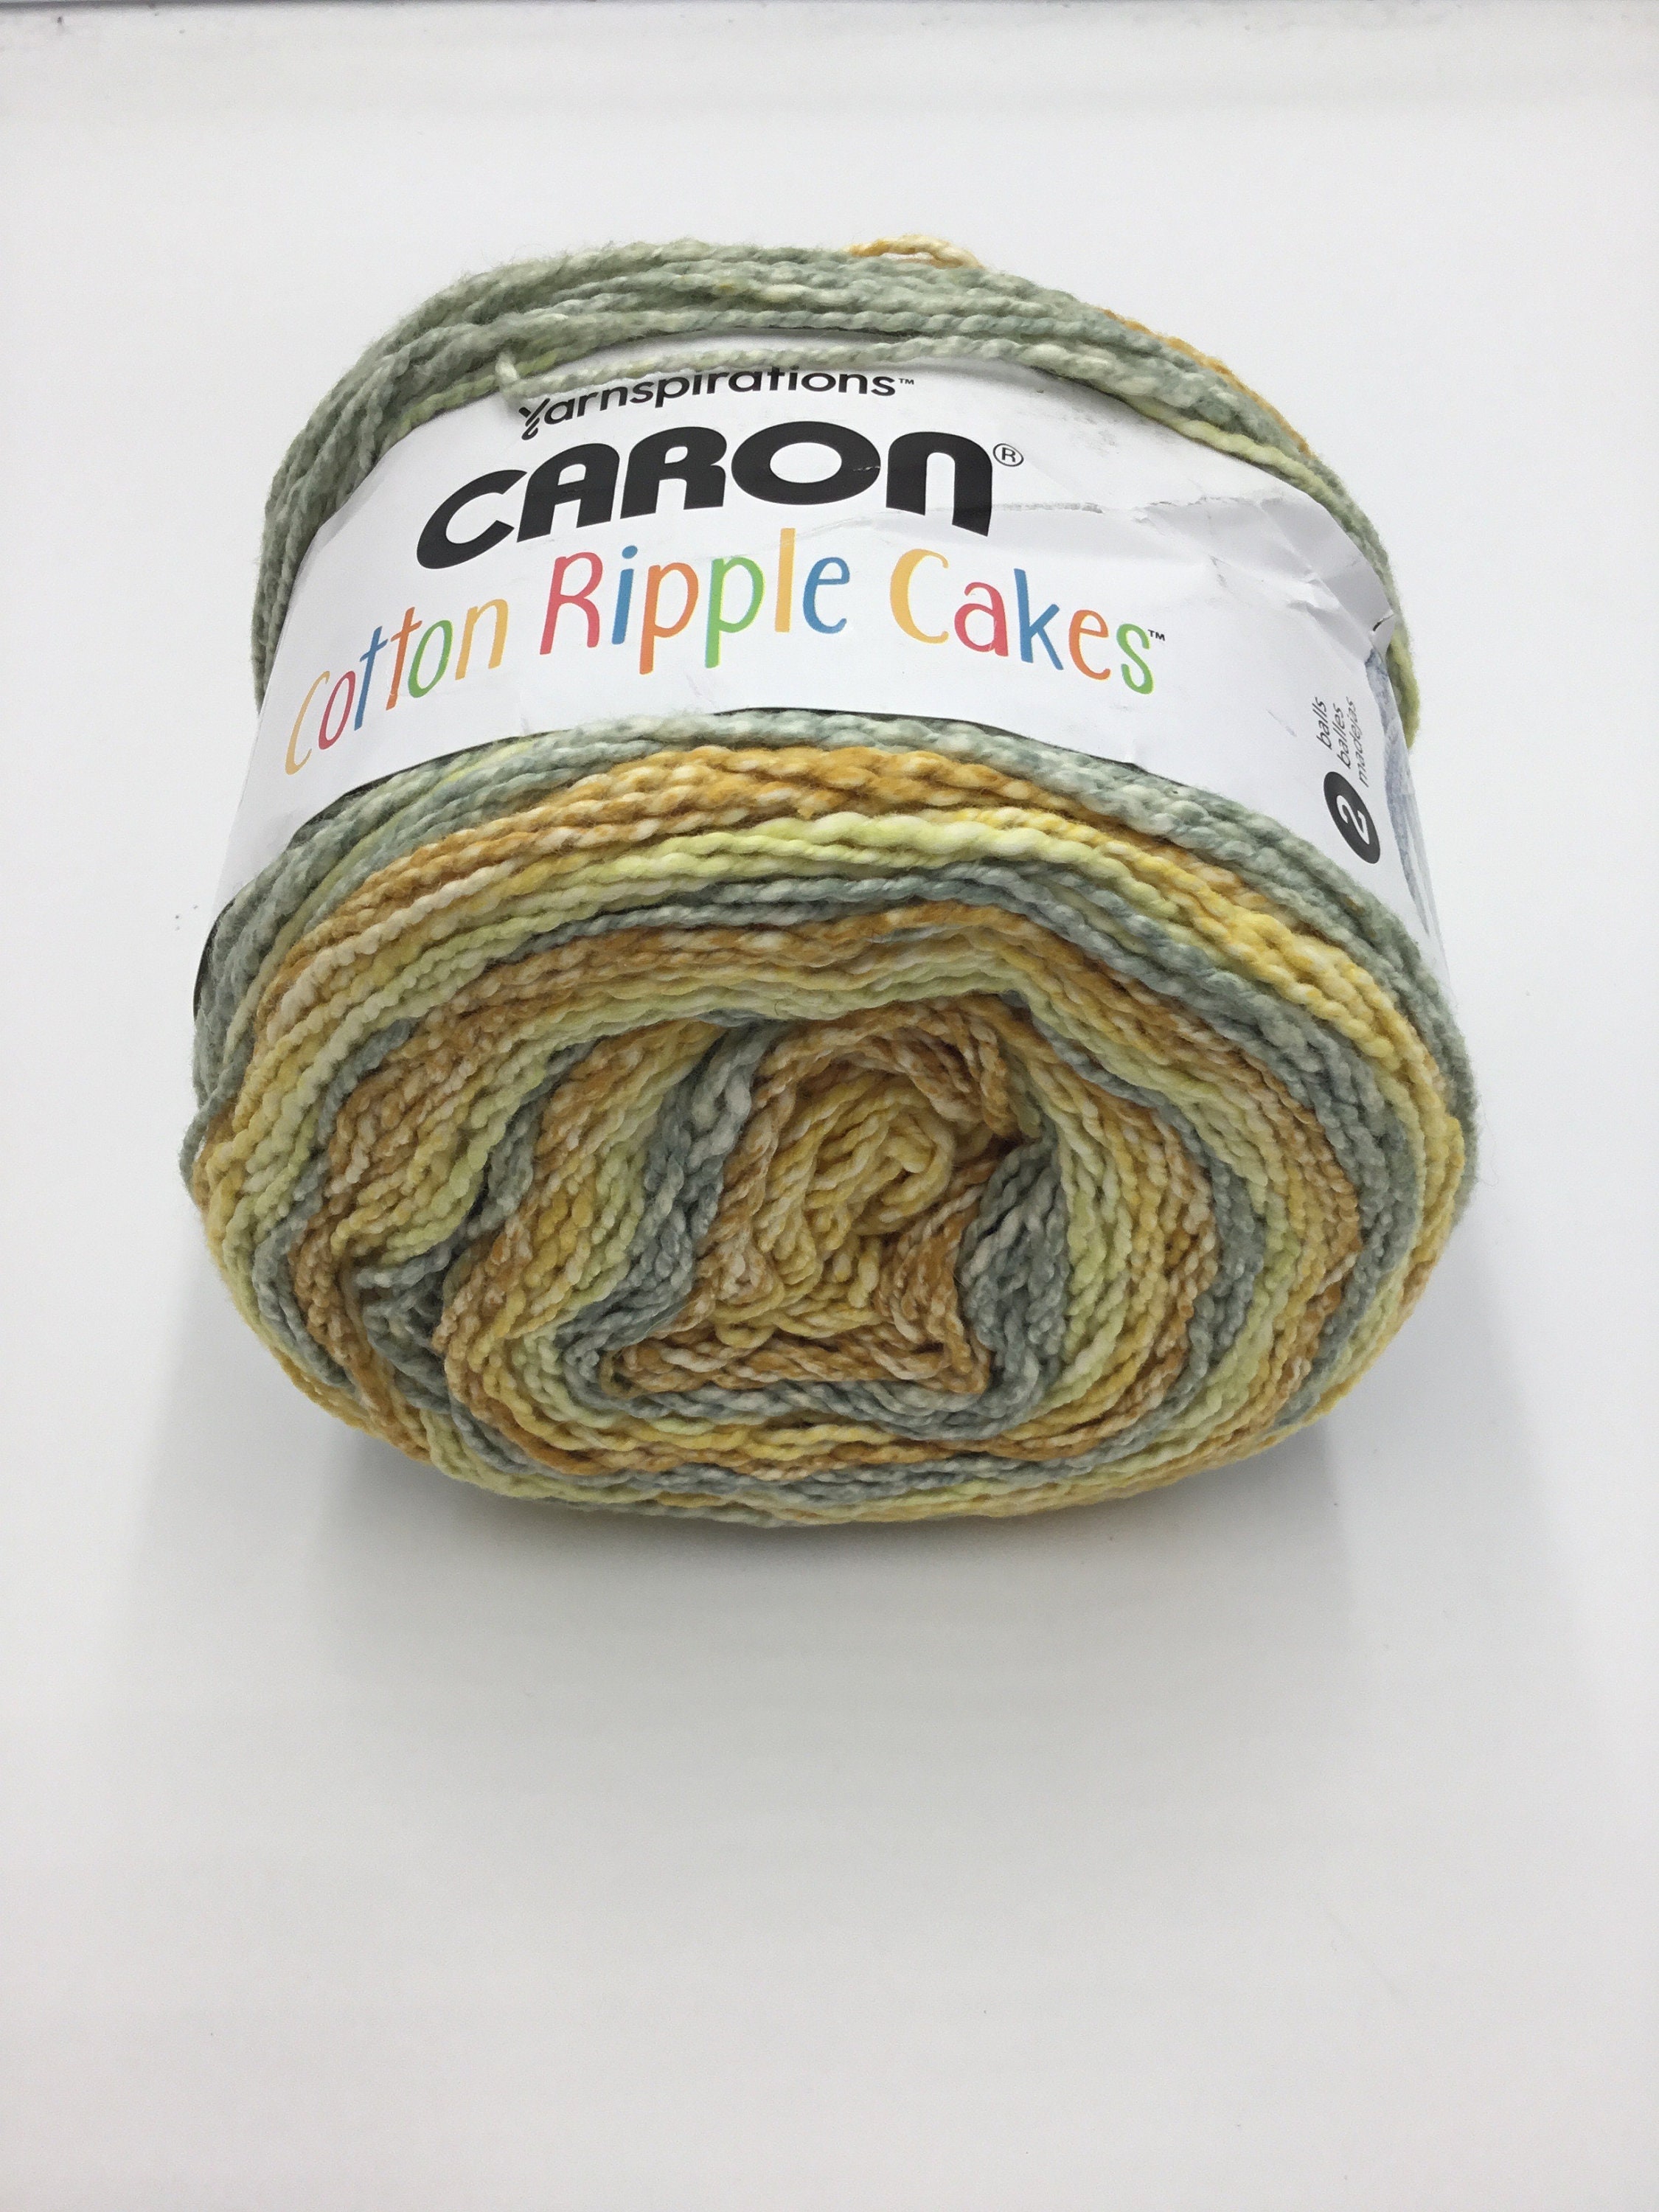 Cotton Cake Yarn Comparison: Caron Cotton vs Sugarwheel Cotton